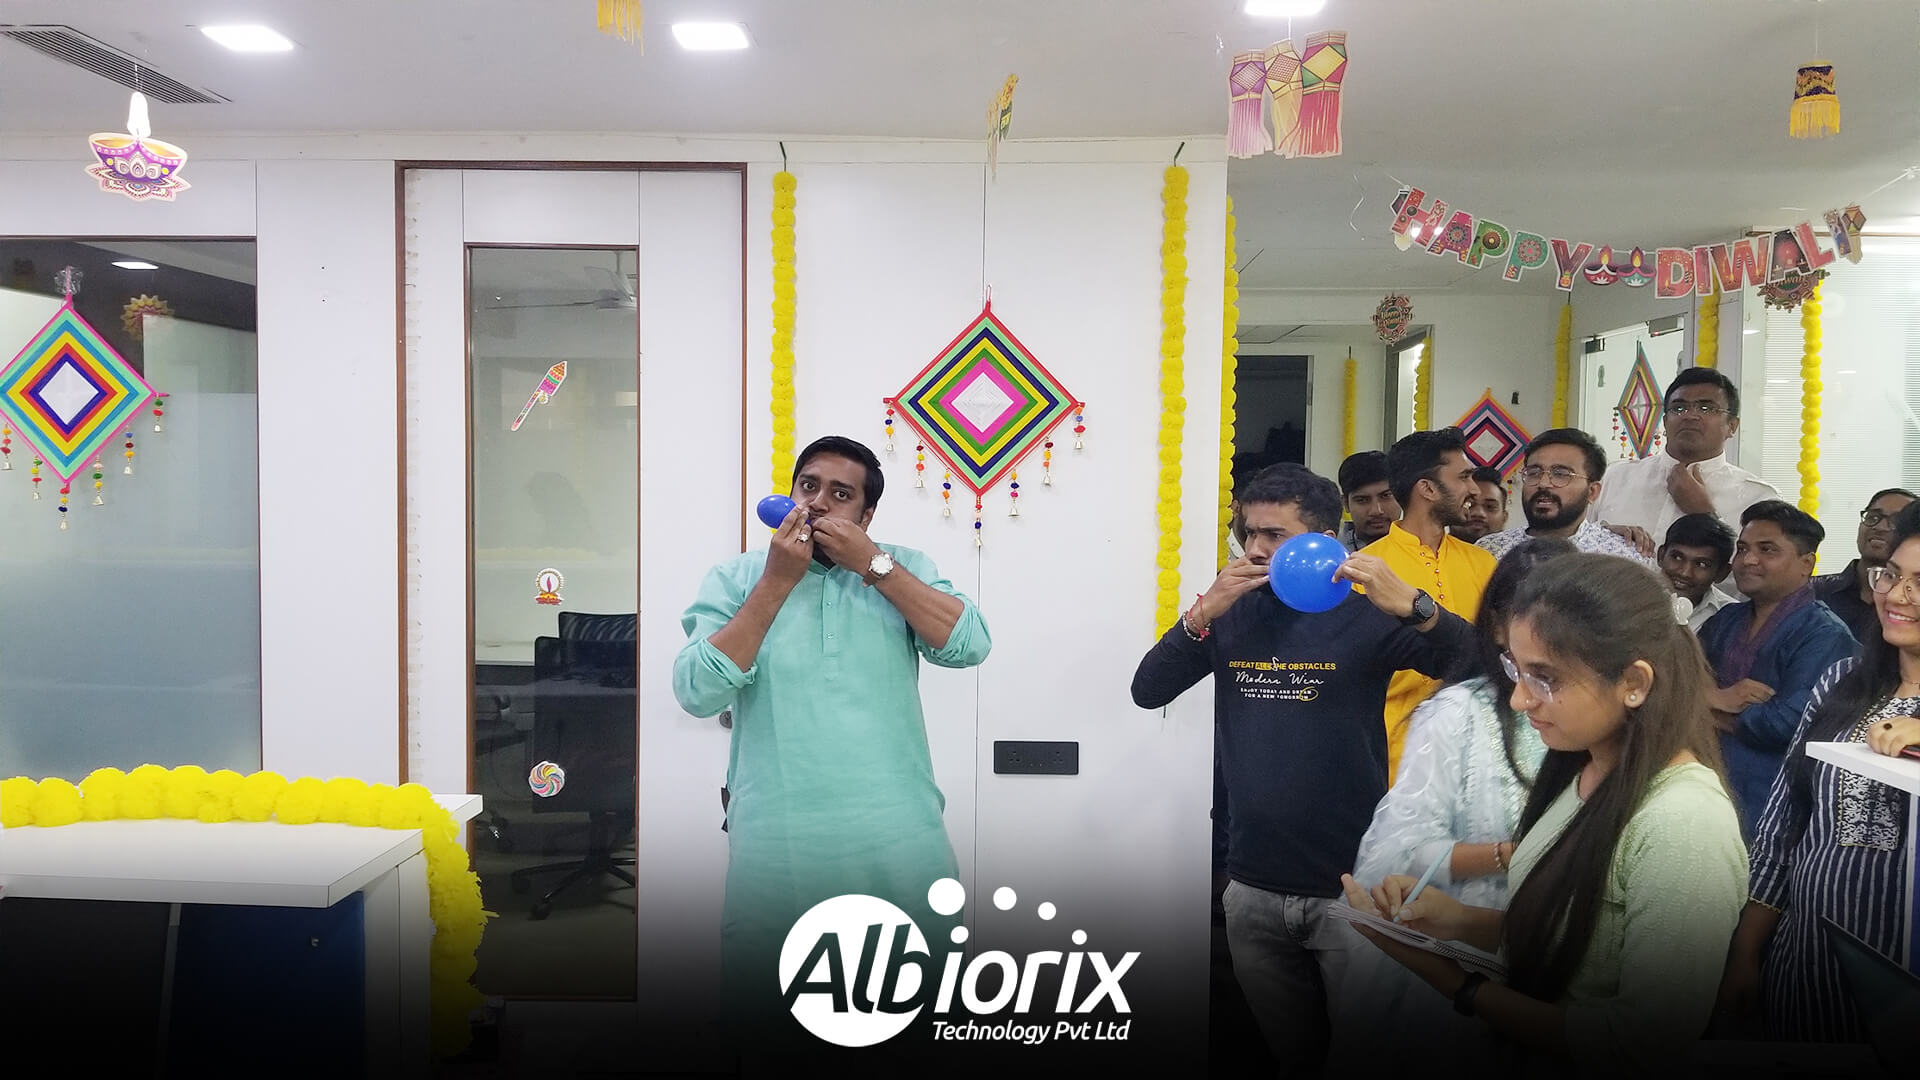 diwali celebration in albiorix office